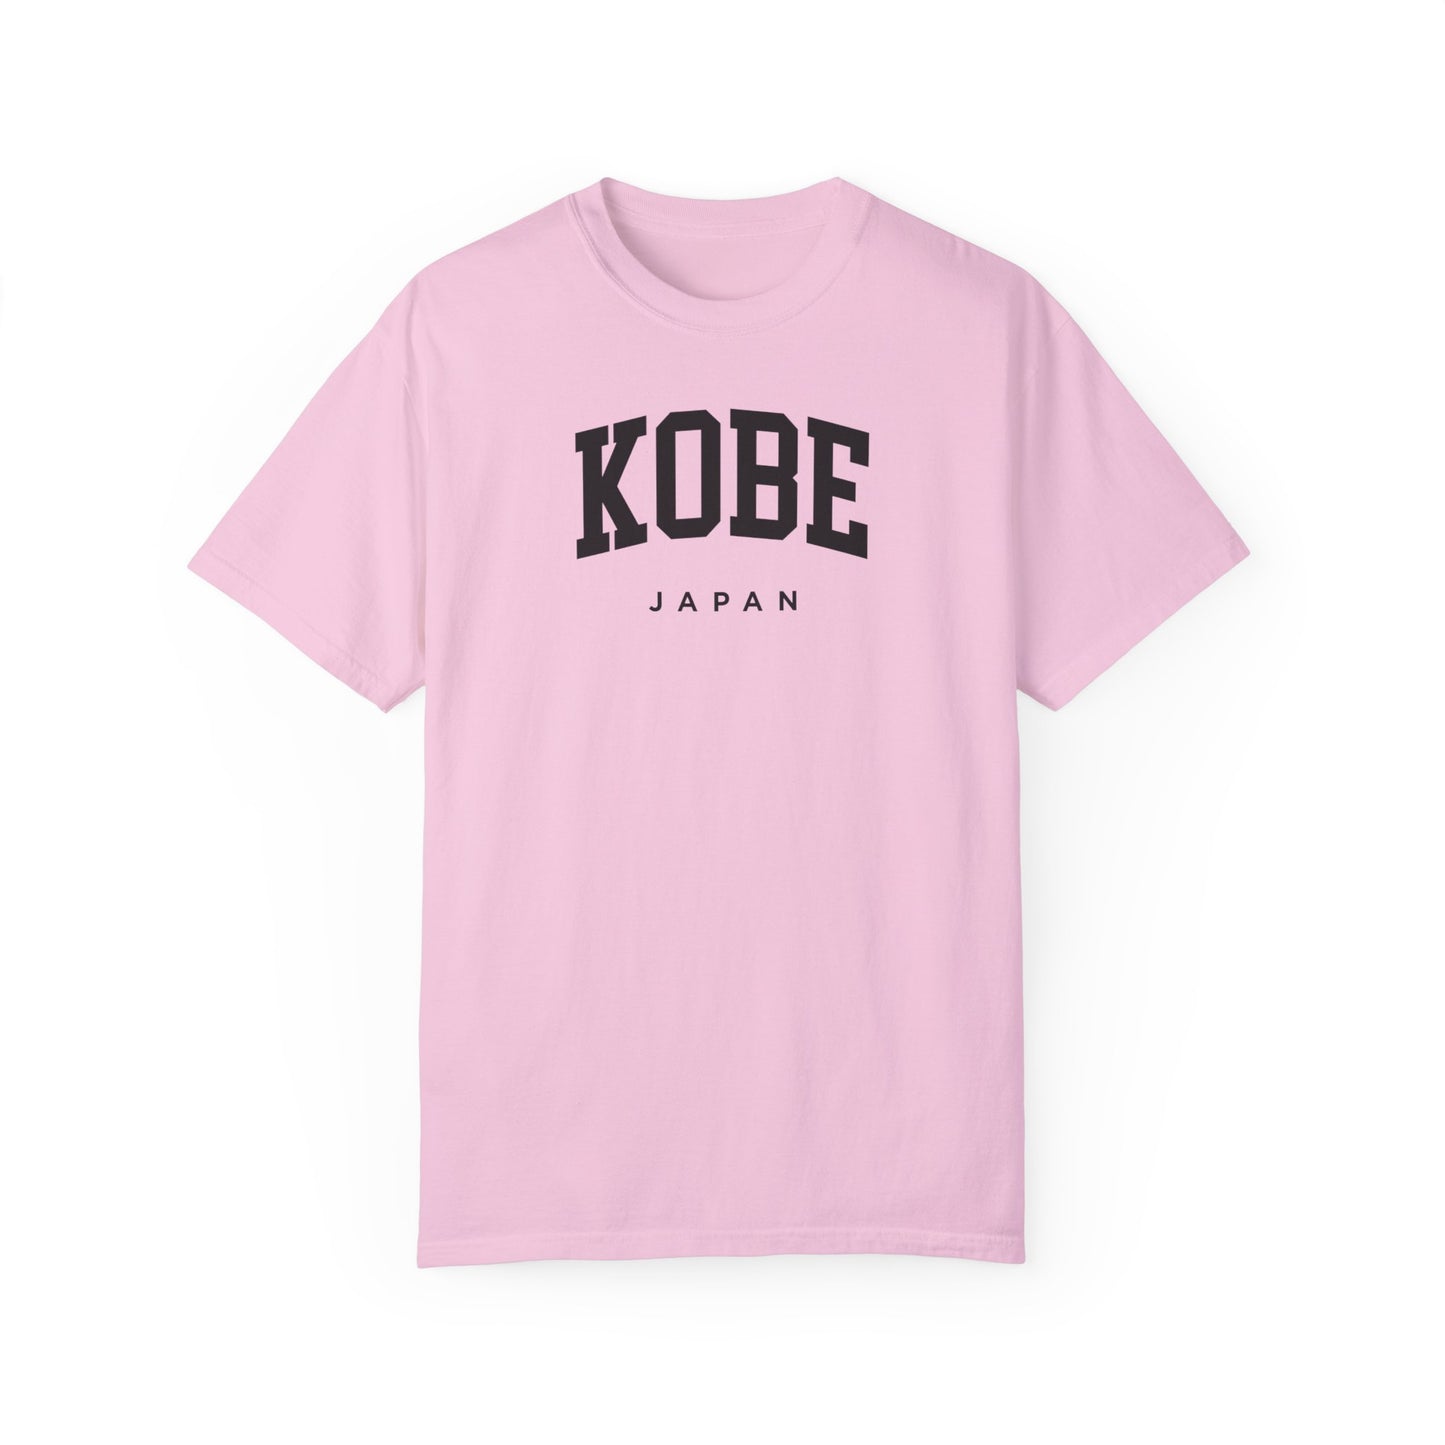 Kobe Japan Comfort Colors® Tee